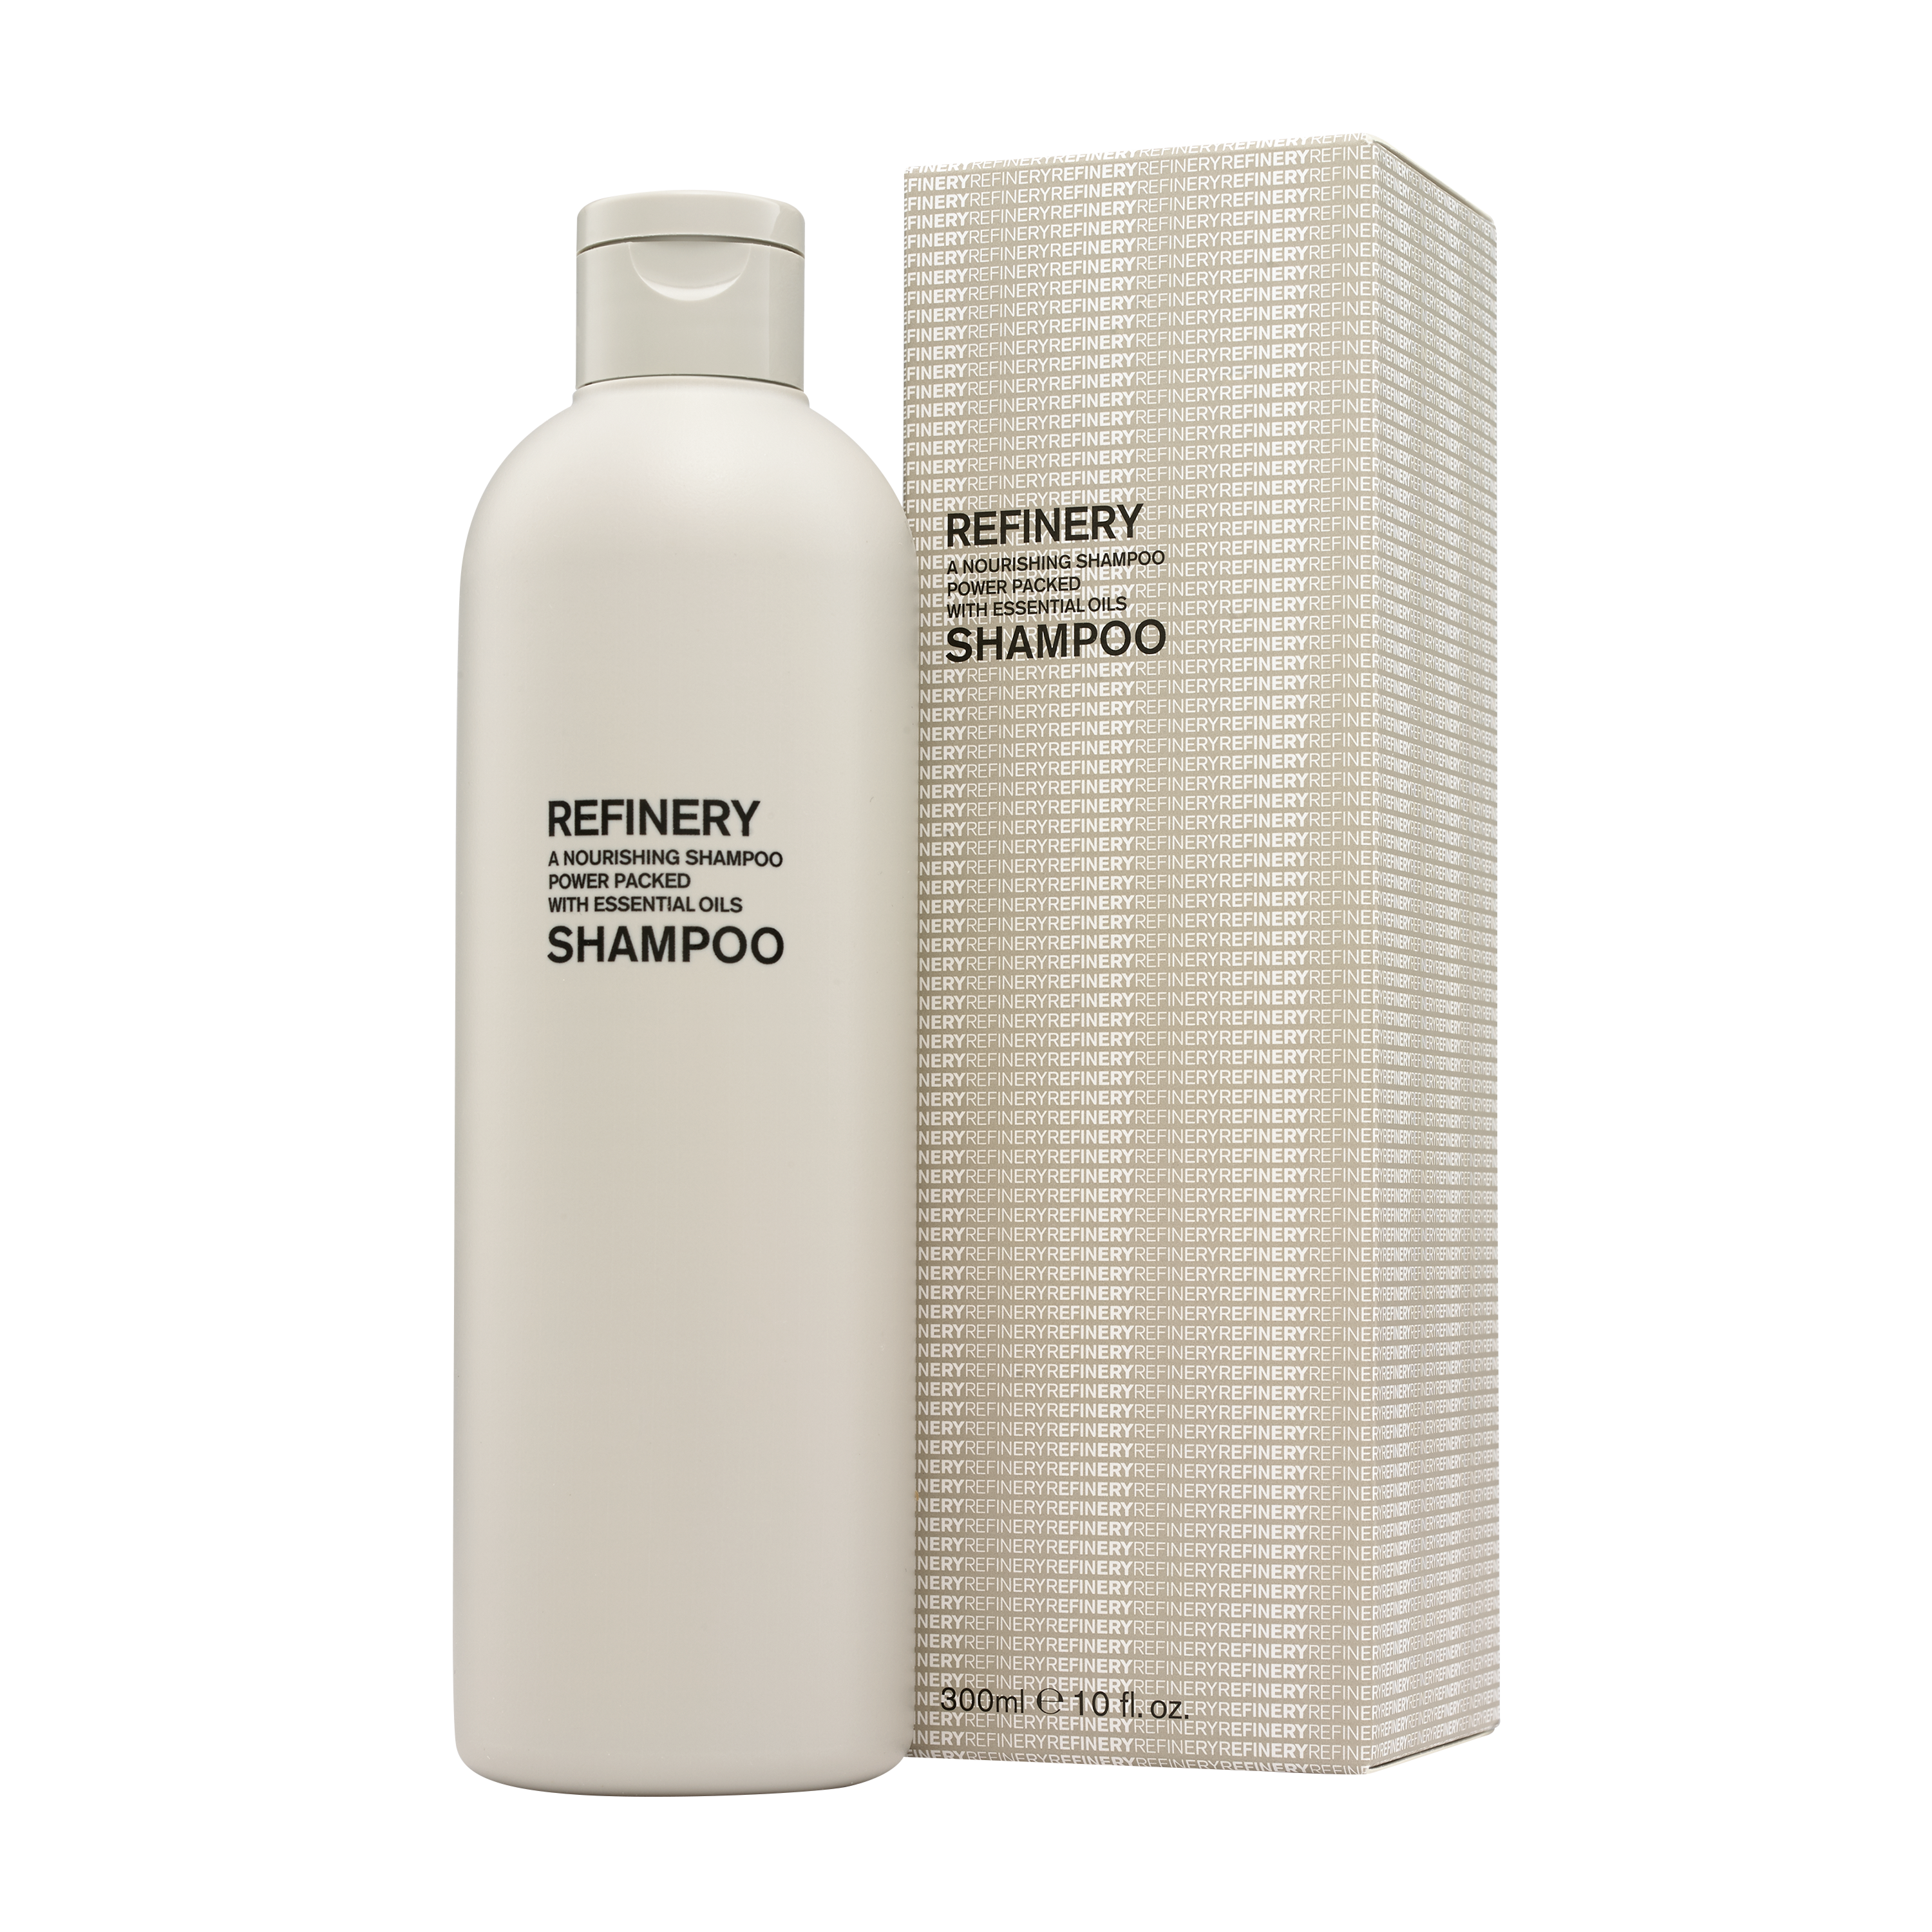 Refinery Shampoo Aromatherapy Associates